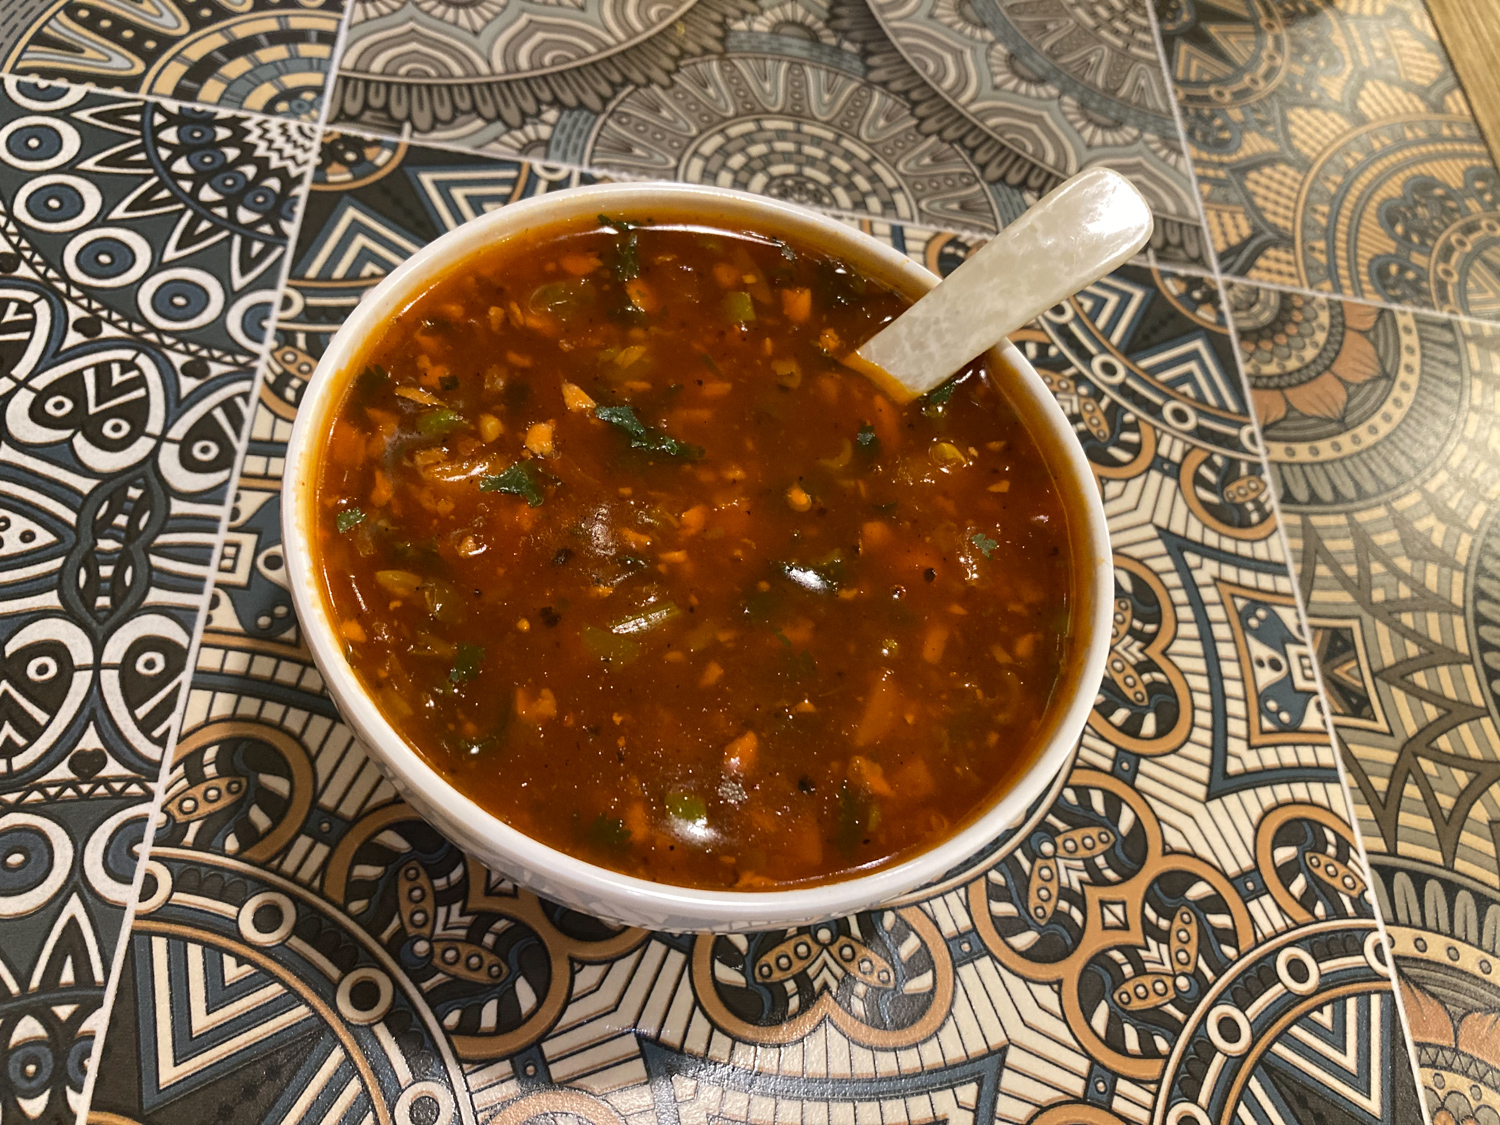 Excellent Indian sour spicy soup